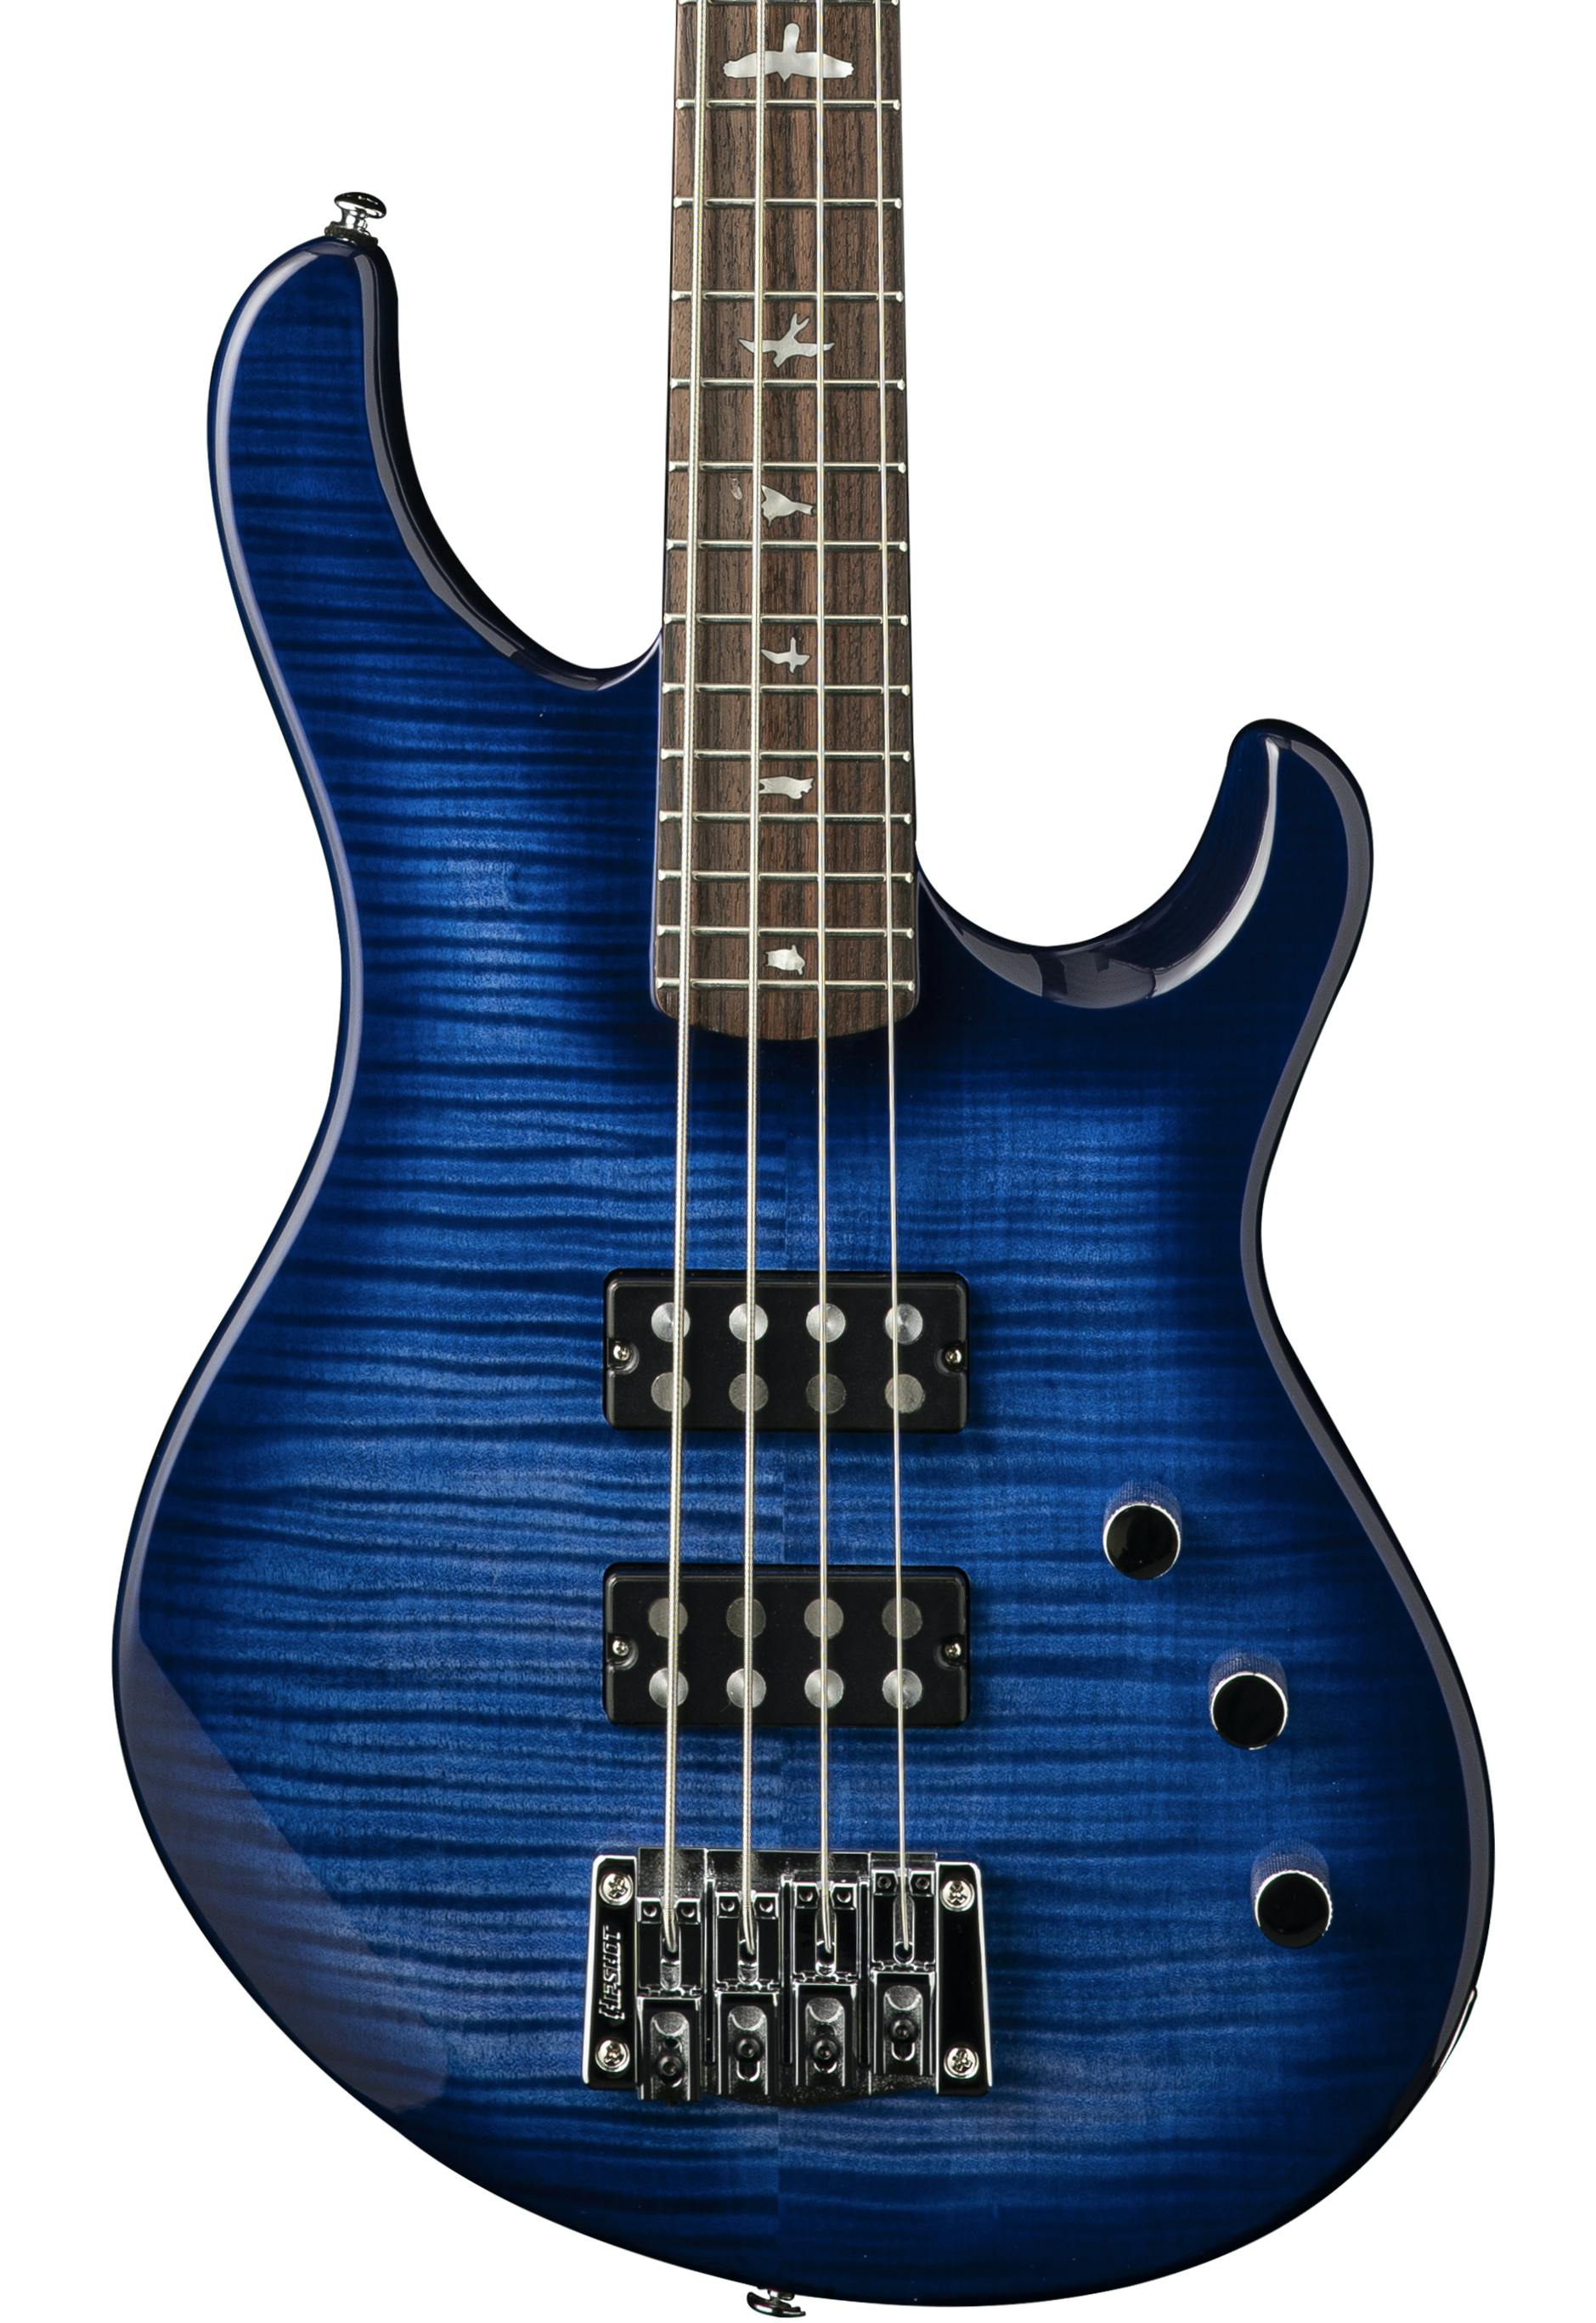 PRS SE Kingfisher Bass Guitar in Faded Blue Wraparound Burst